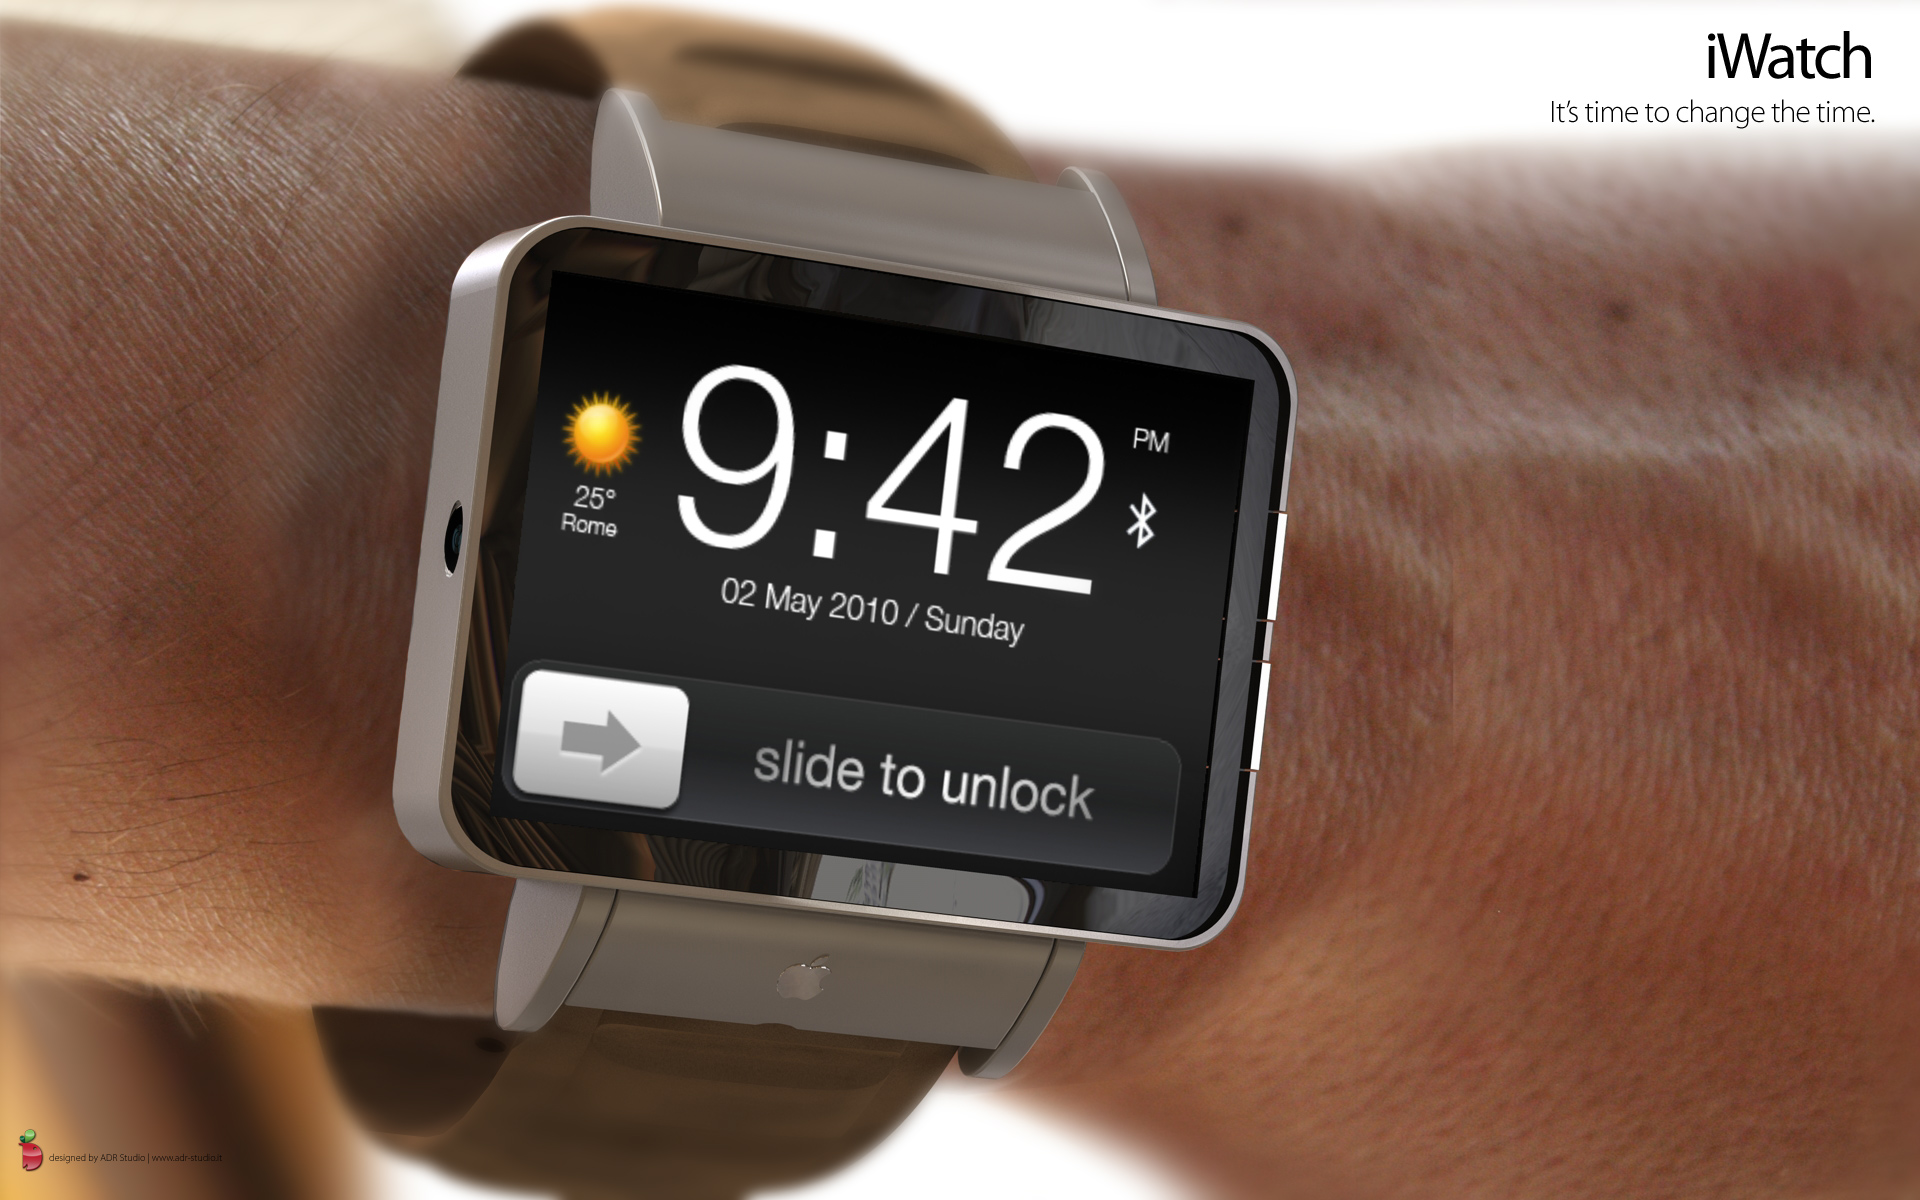 iWatch, mockup de relógio de pulso da Apple